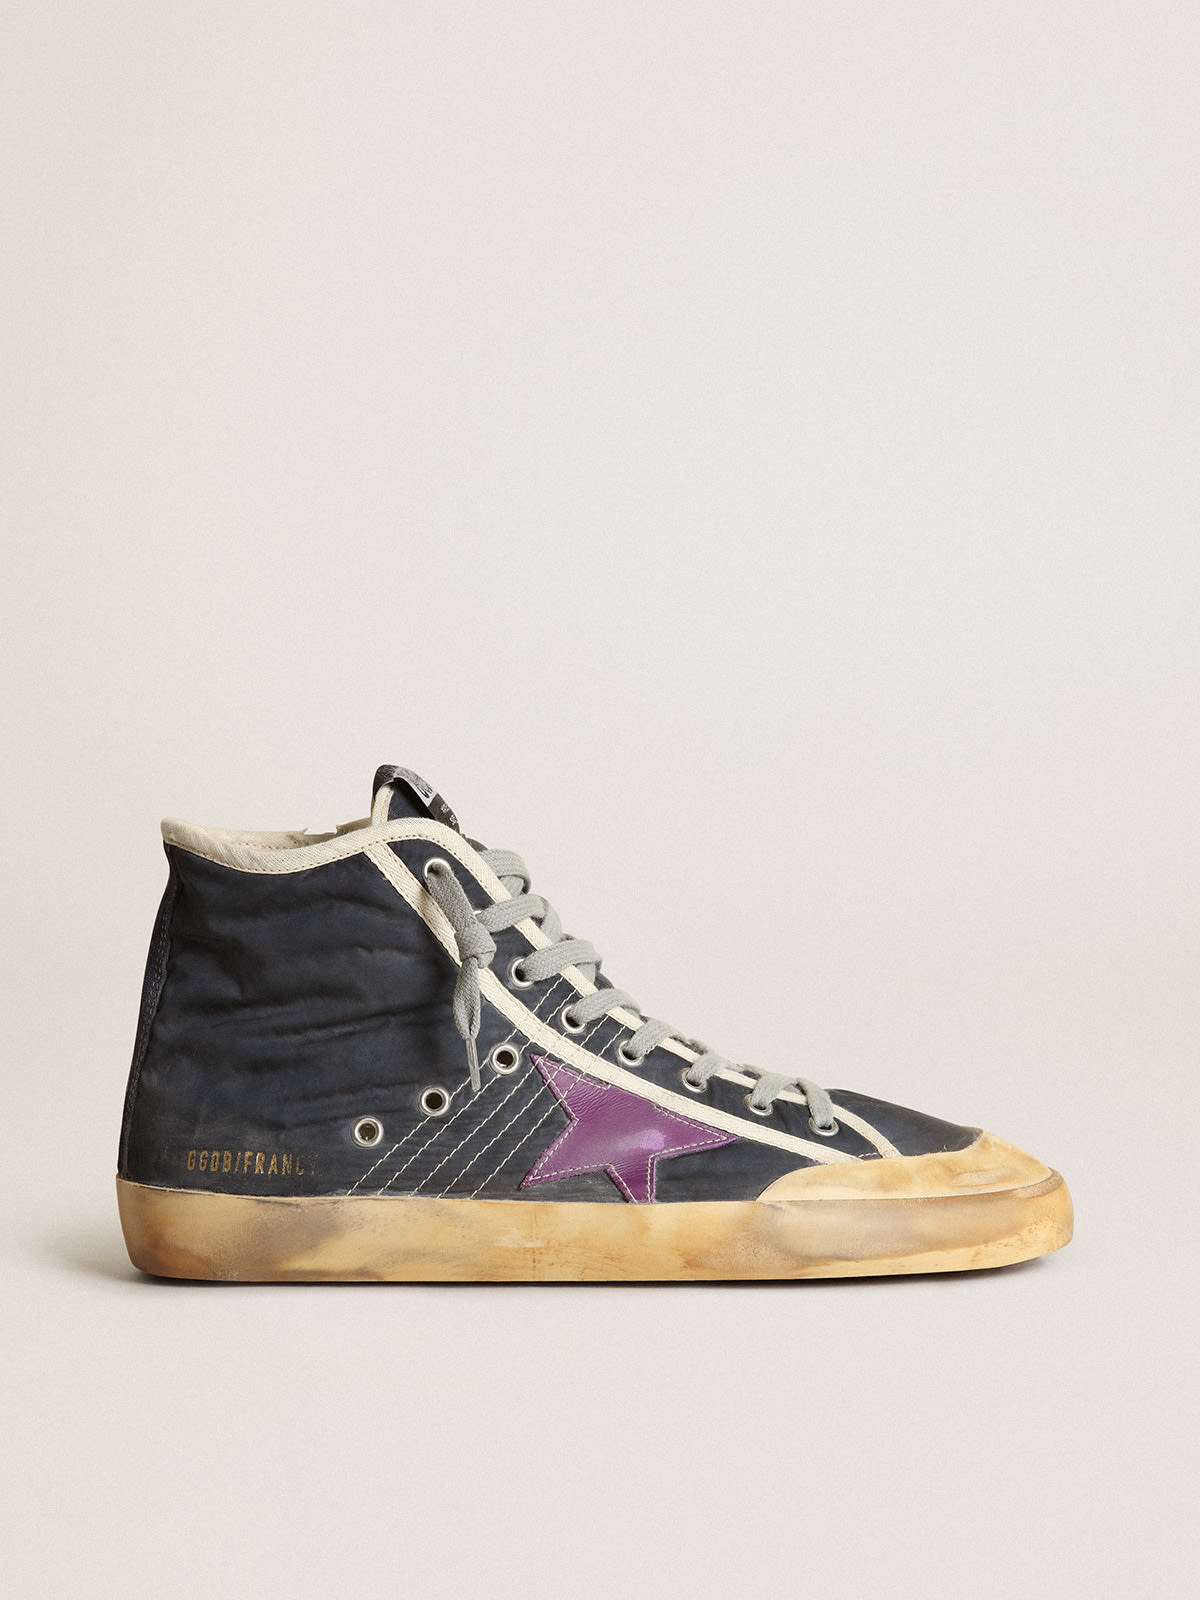 Golden Goose - Sneakers Francy Penstar en nylon bleu marine avec étoile en cuir violet et contrefort en daim noir in 